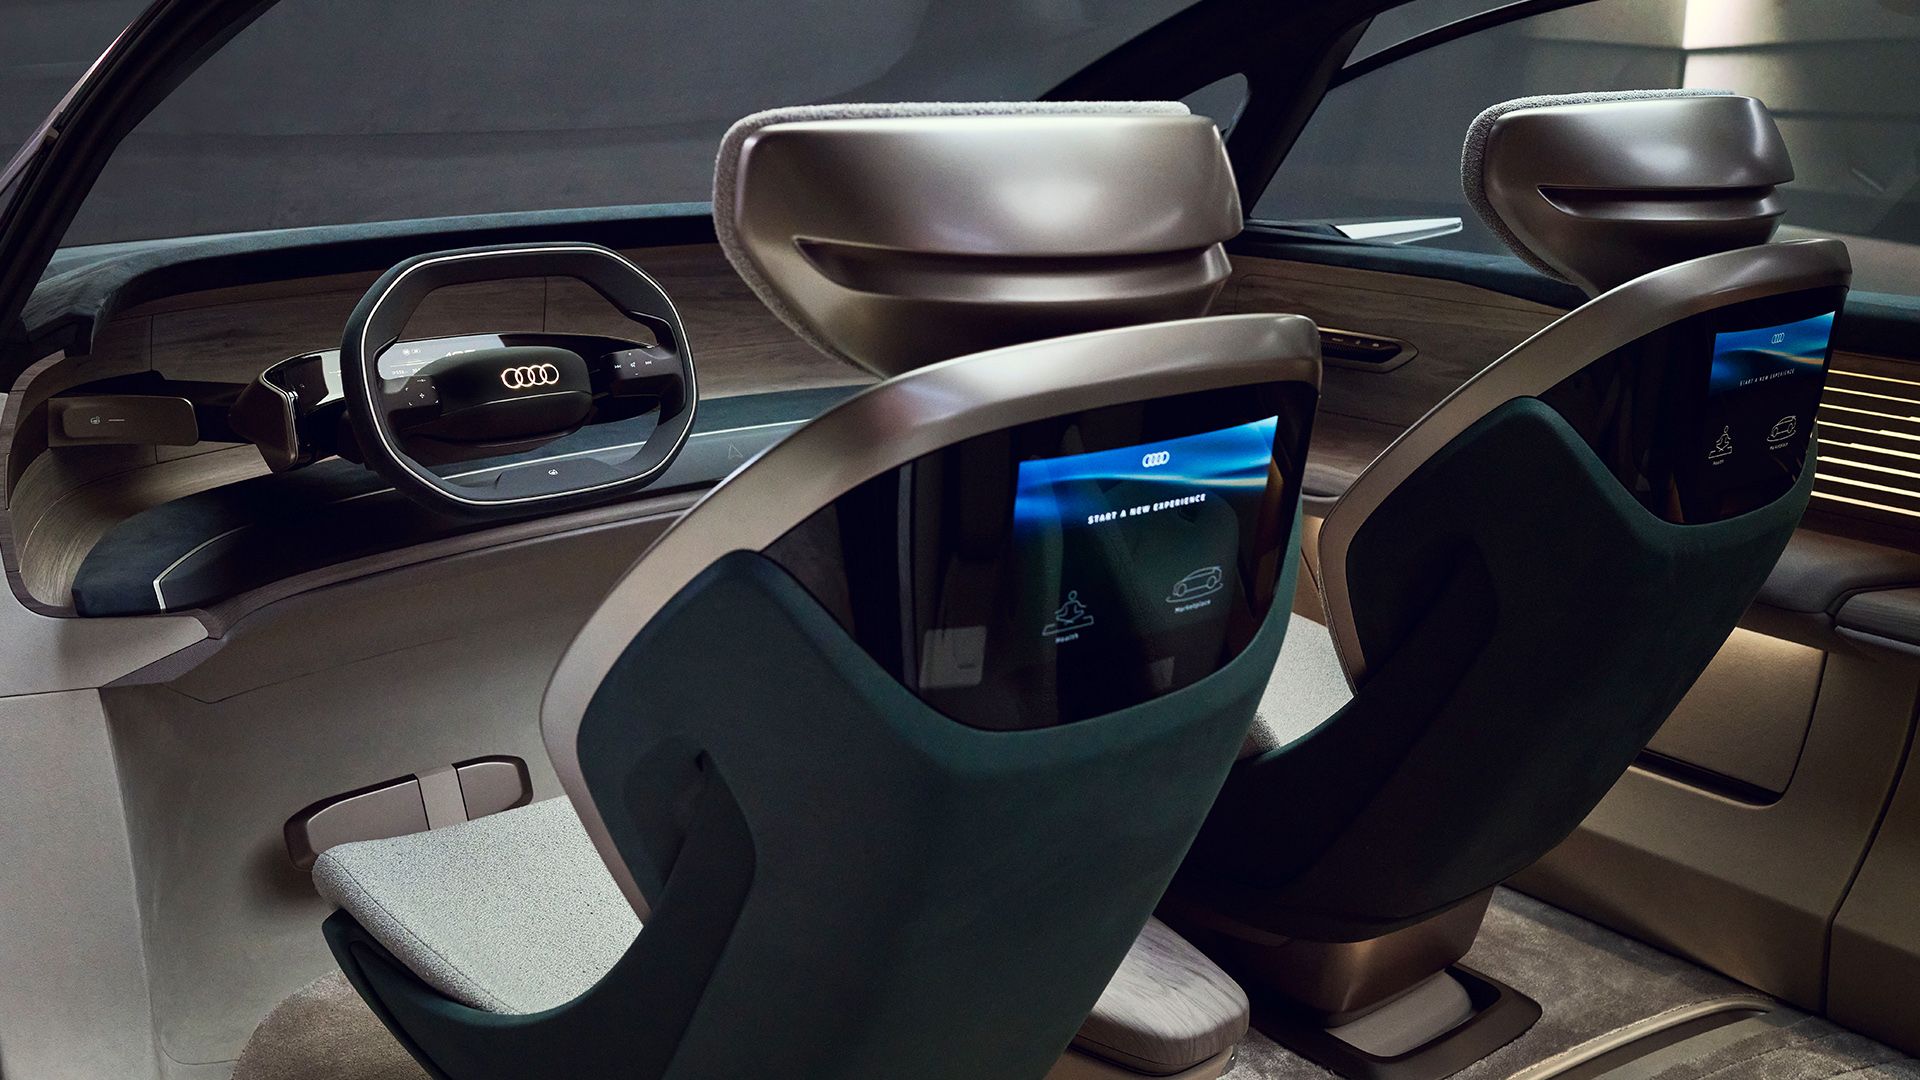 Sitze im Innenraum des Audi urbansphere concept.